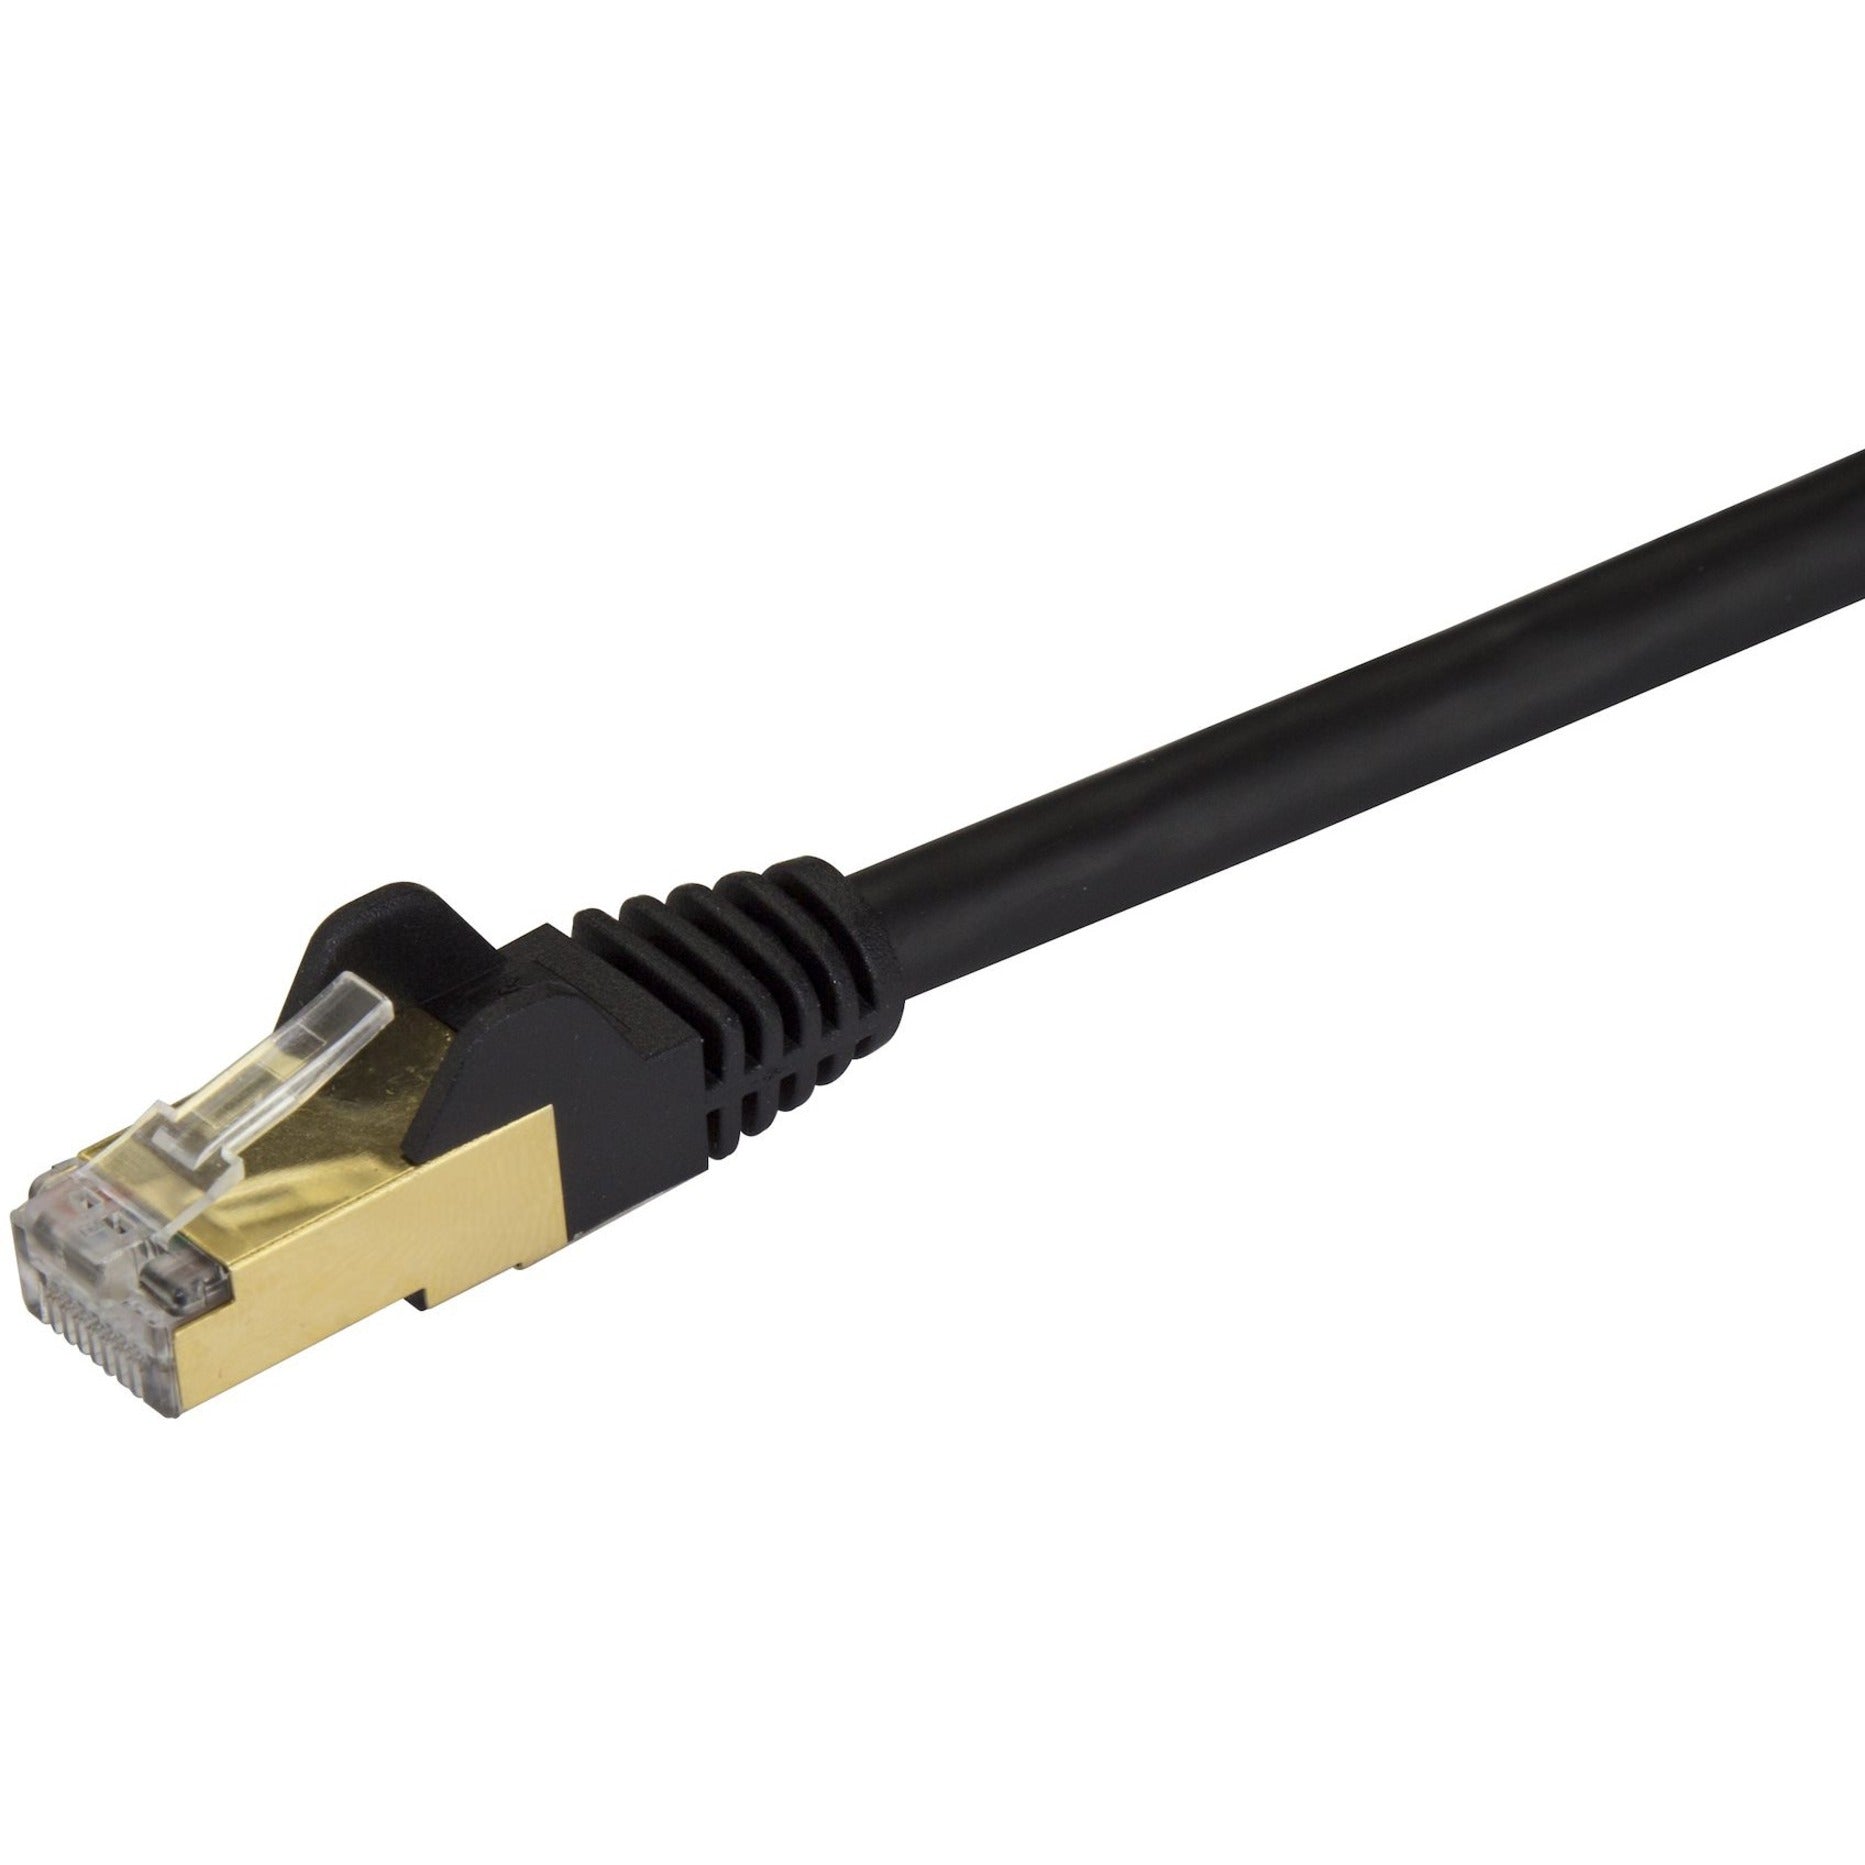 StarTech.com C6ASPAT8BK Cat6a Ethernet Patch Cable - Shielded (STP) - 8 ft., Black, Snagless RJ45 Ethernet Cord